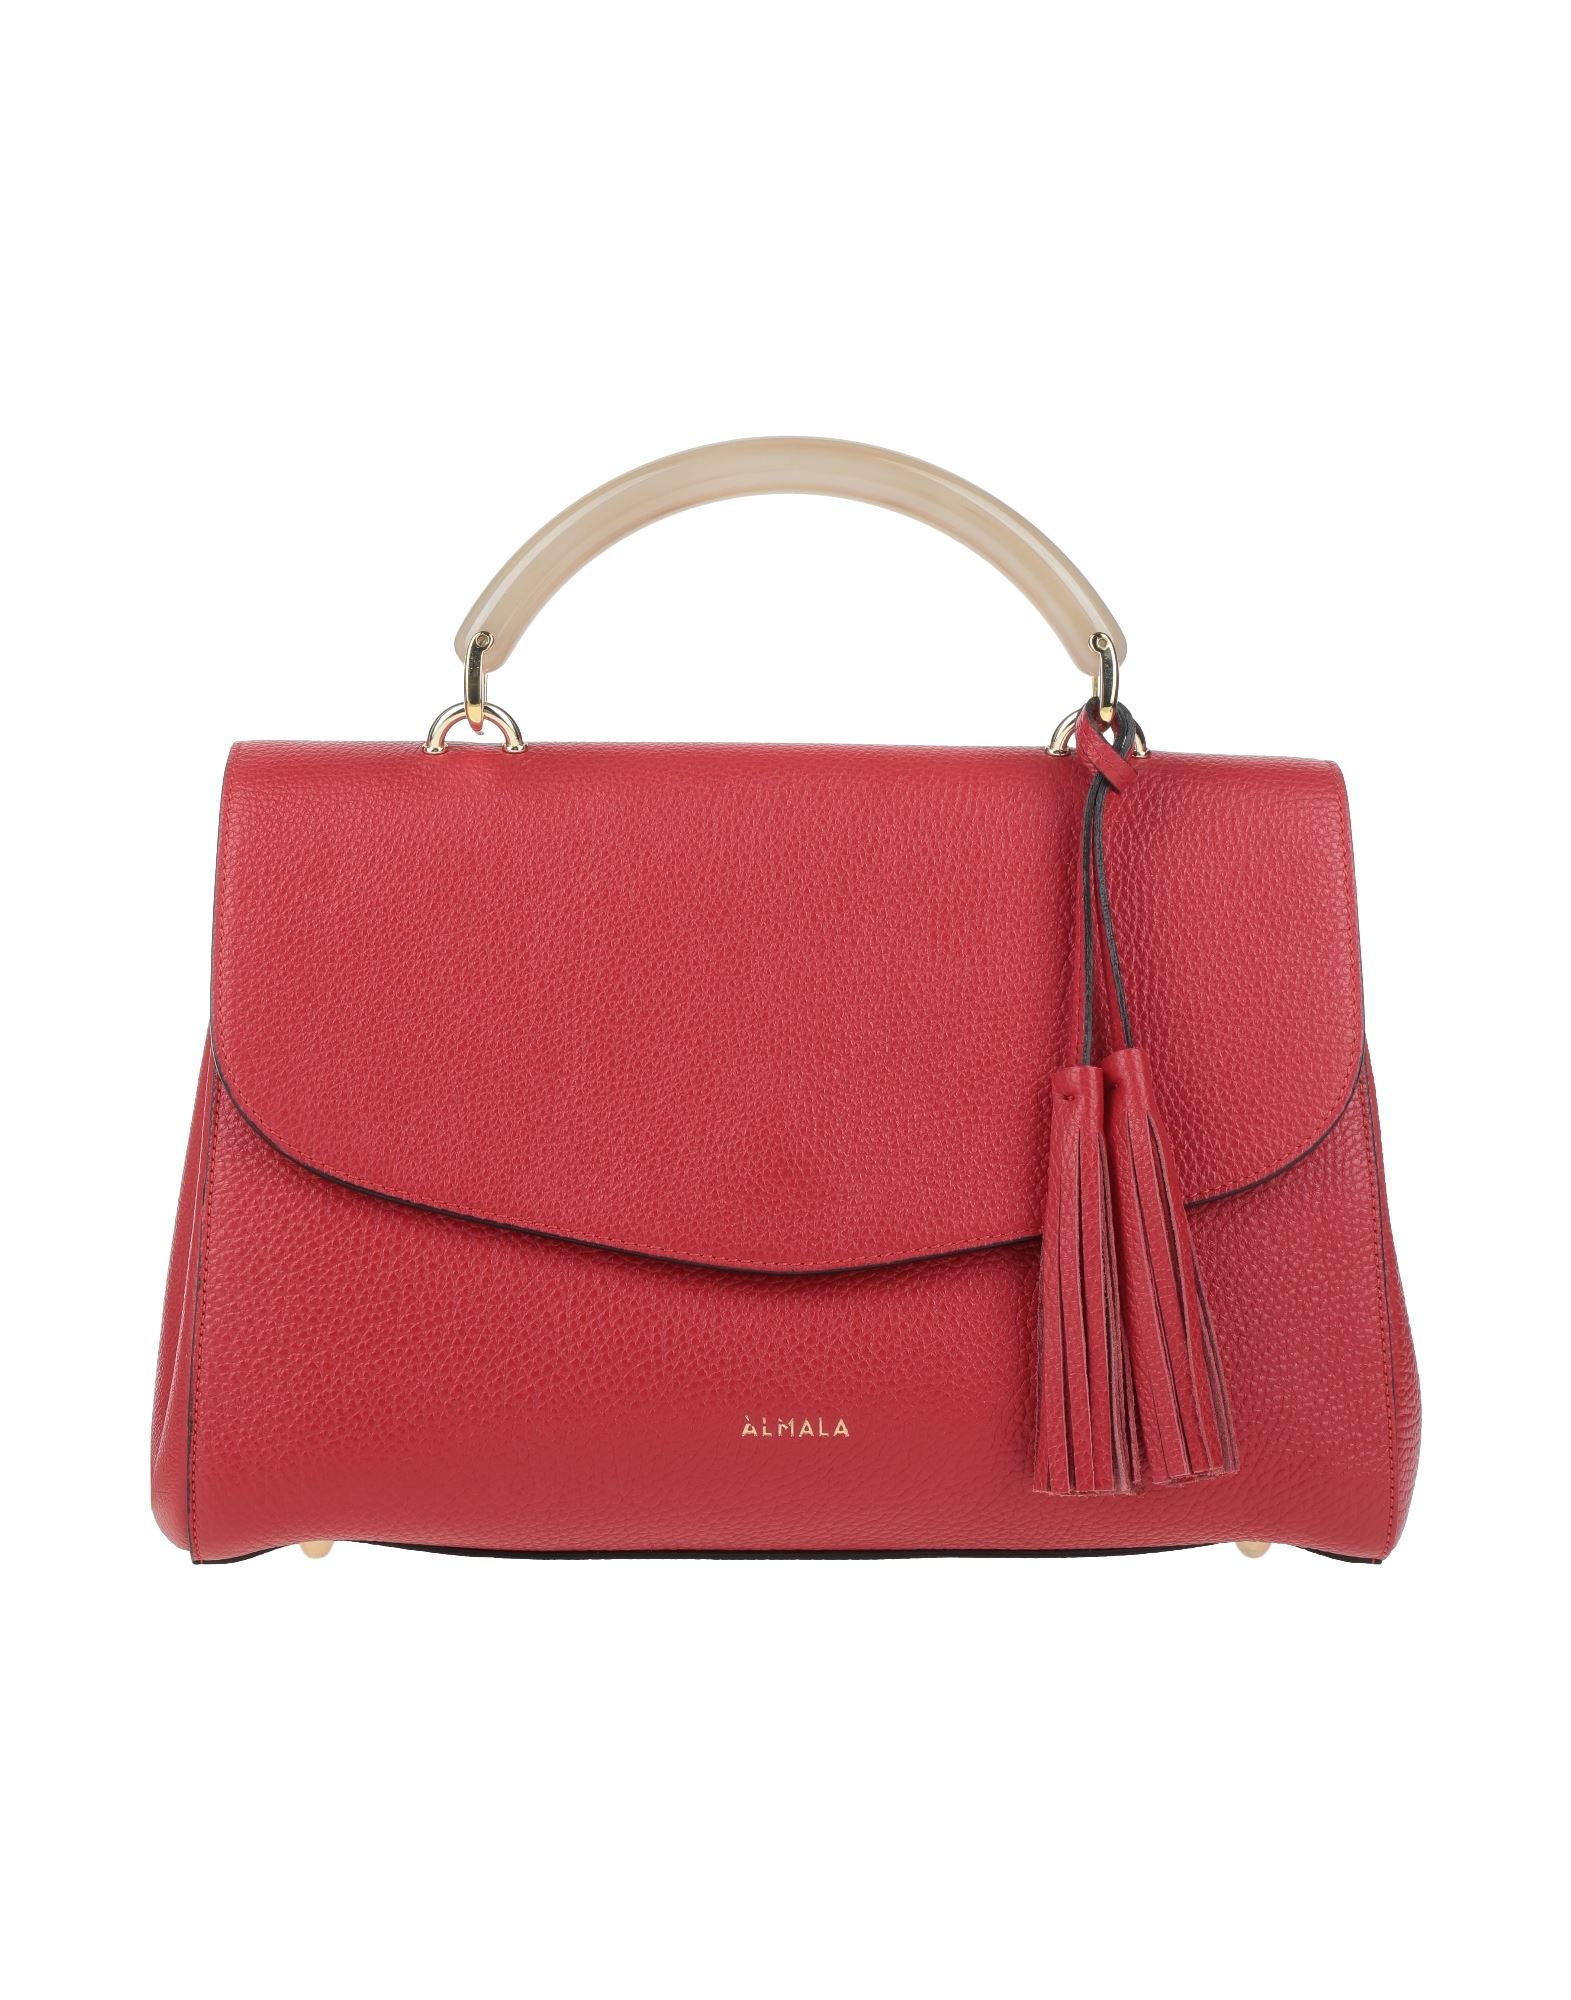 Almala Handbags In Red